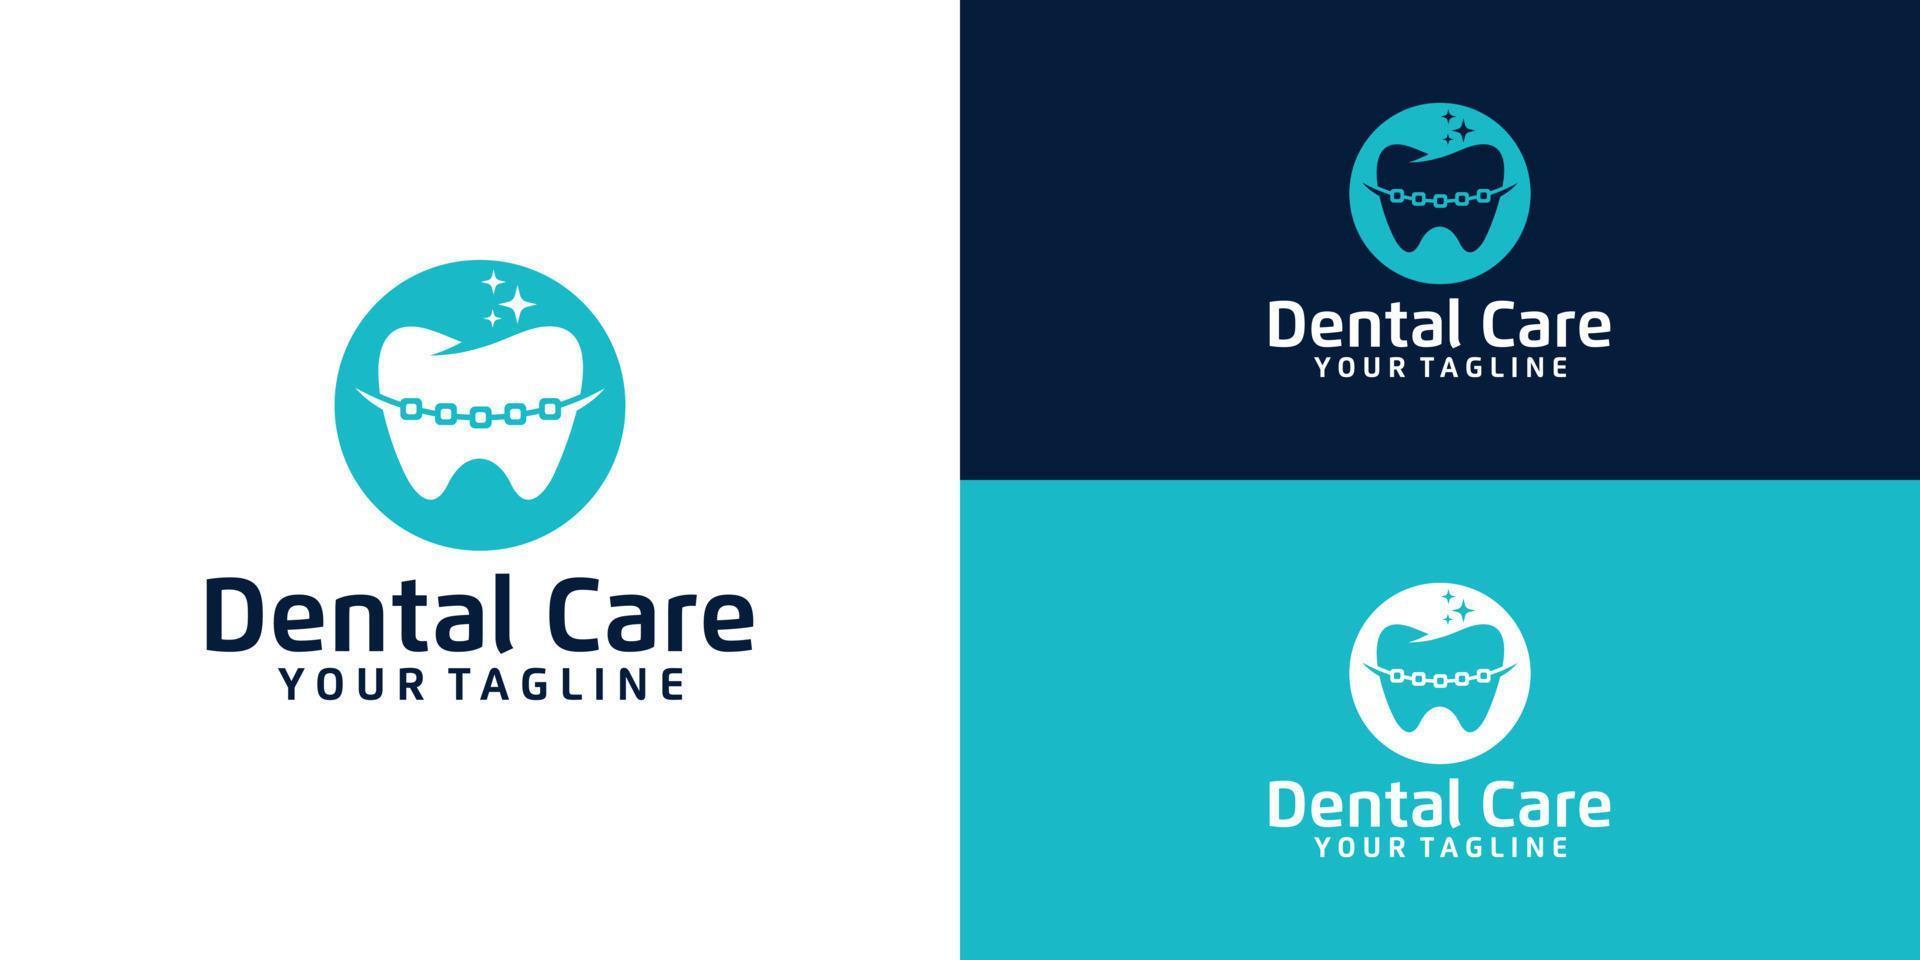 dental care, braces and dental health logo vector